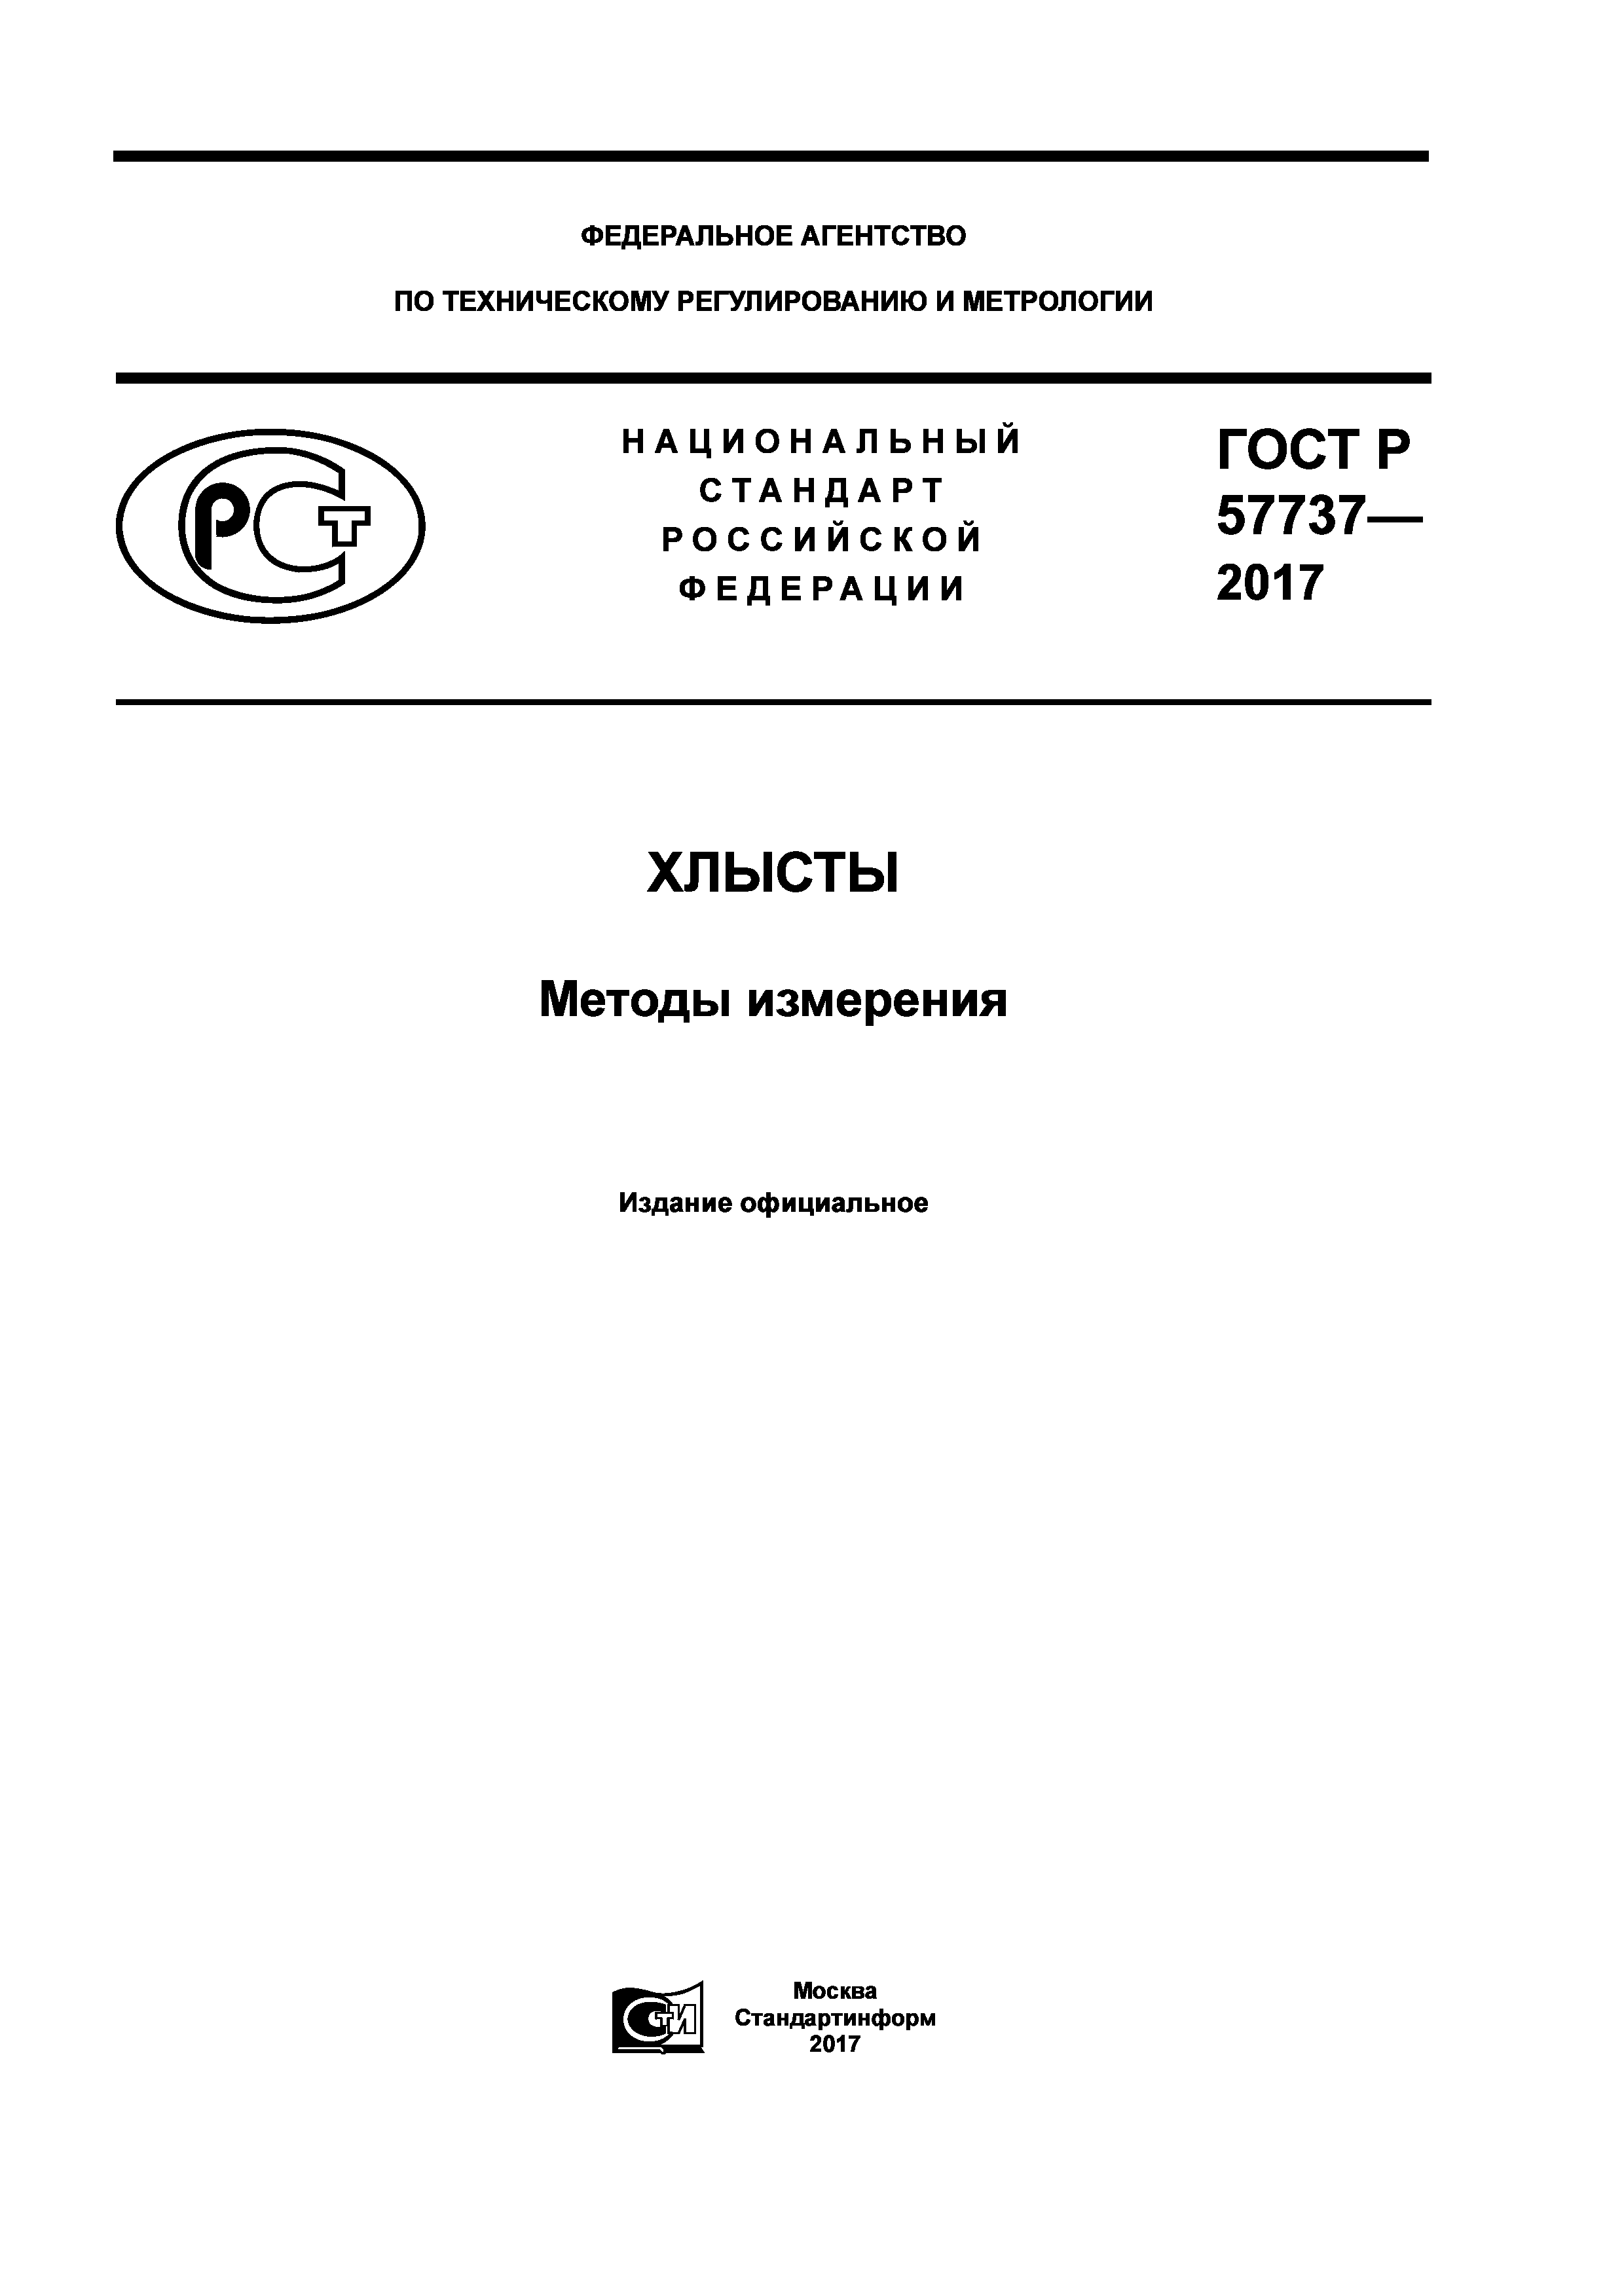 ГОСТ Р 57737-2017